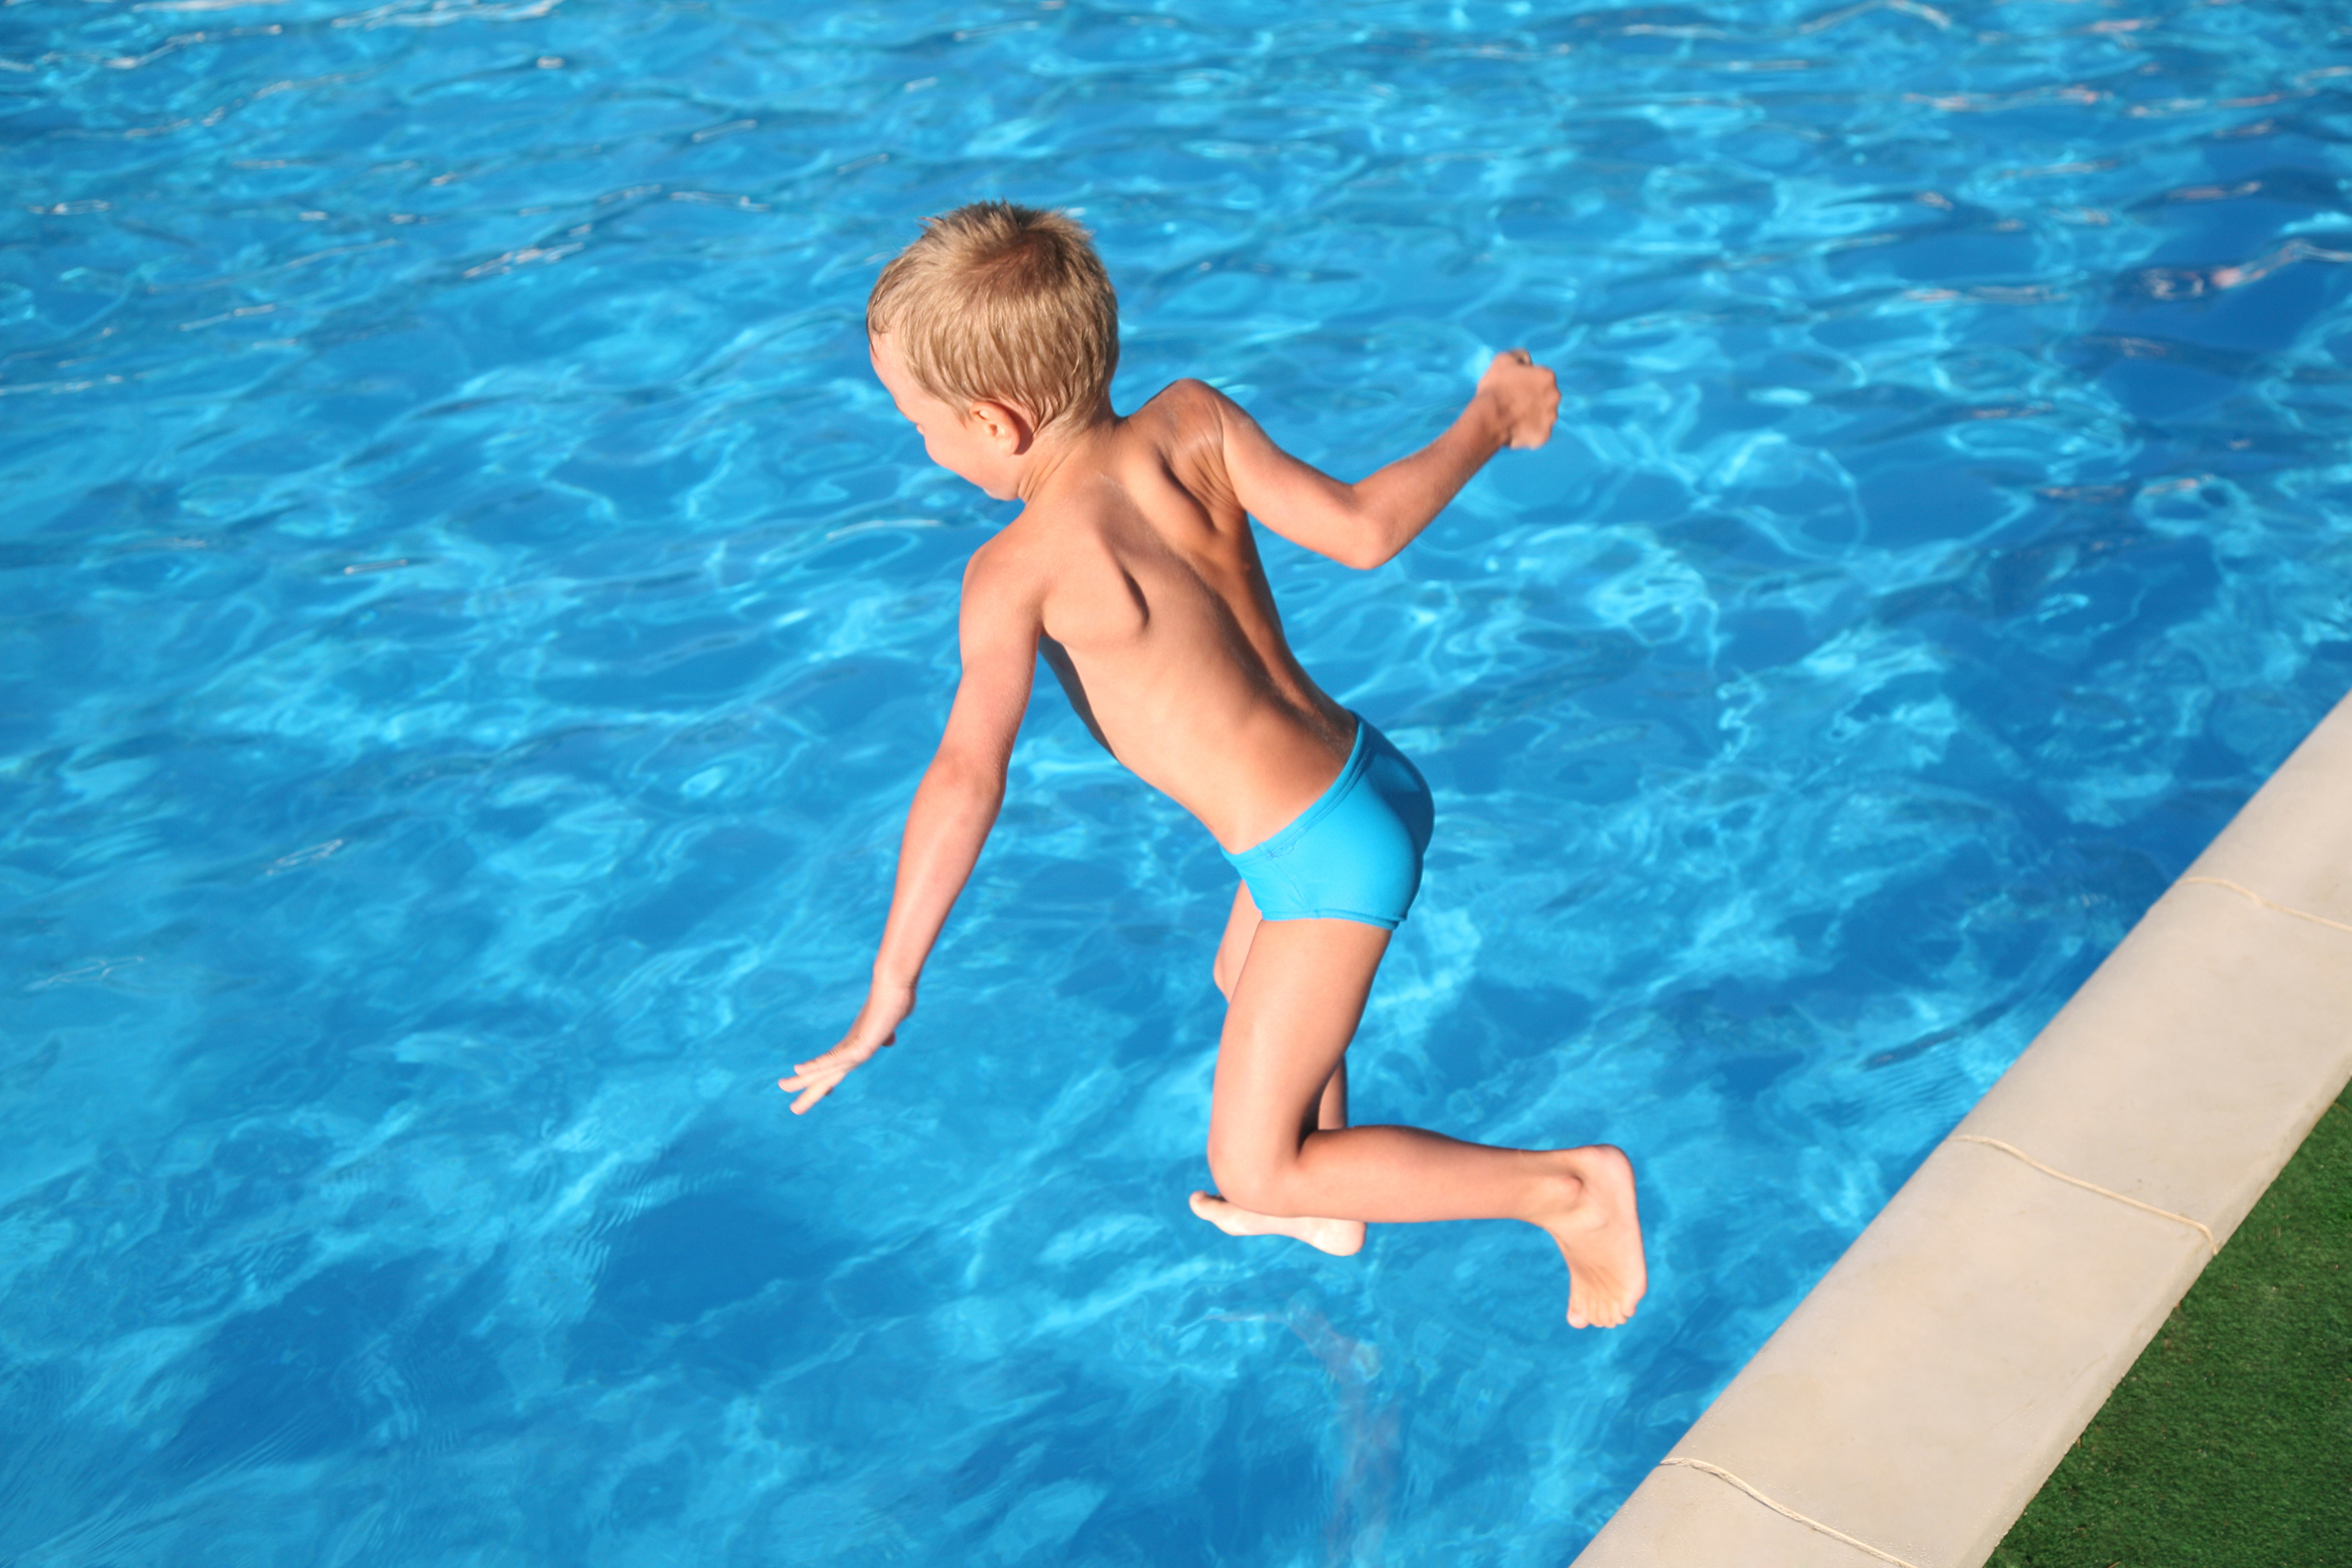 Мальчик трусы бассейн. Мальчики в бассейне. Мальчики в плавках в бассейне. Мальчик купается в бассейне. Дети в плавках в бассейне.